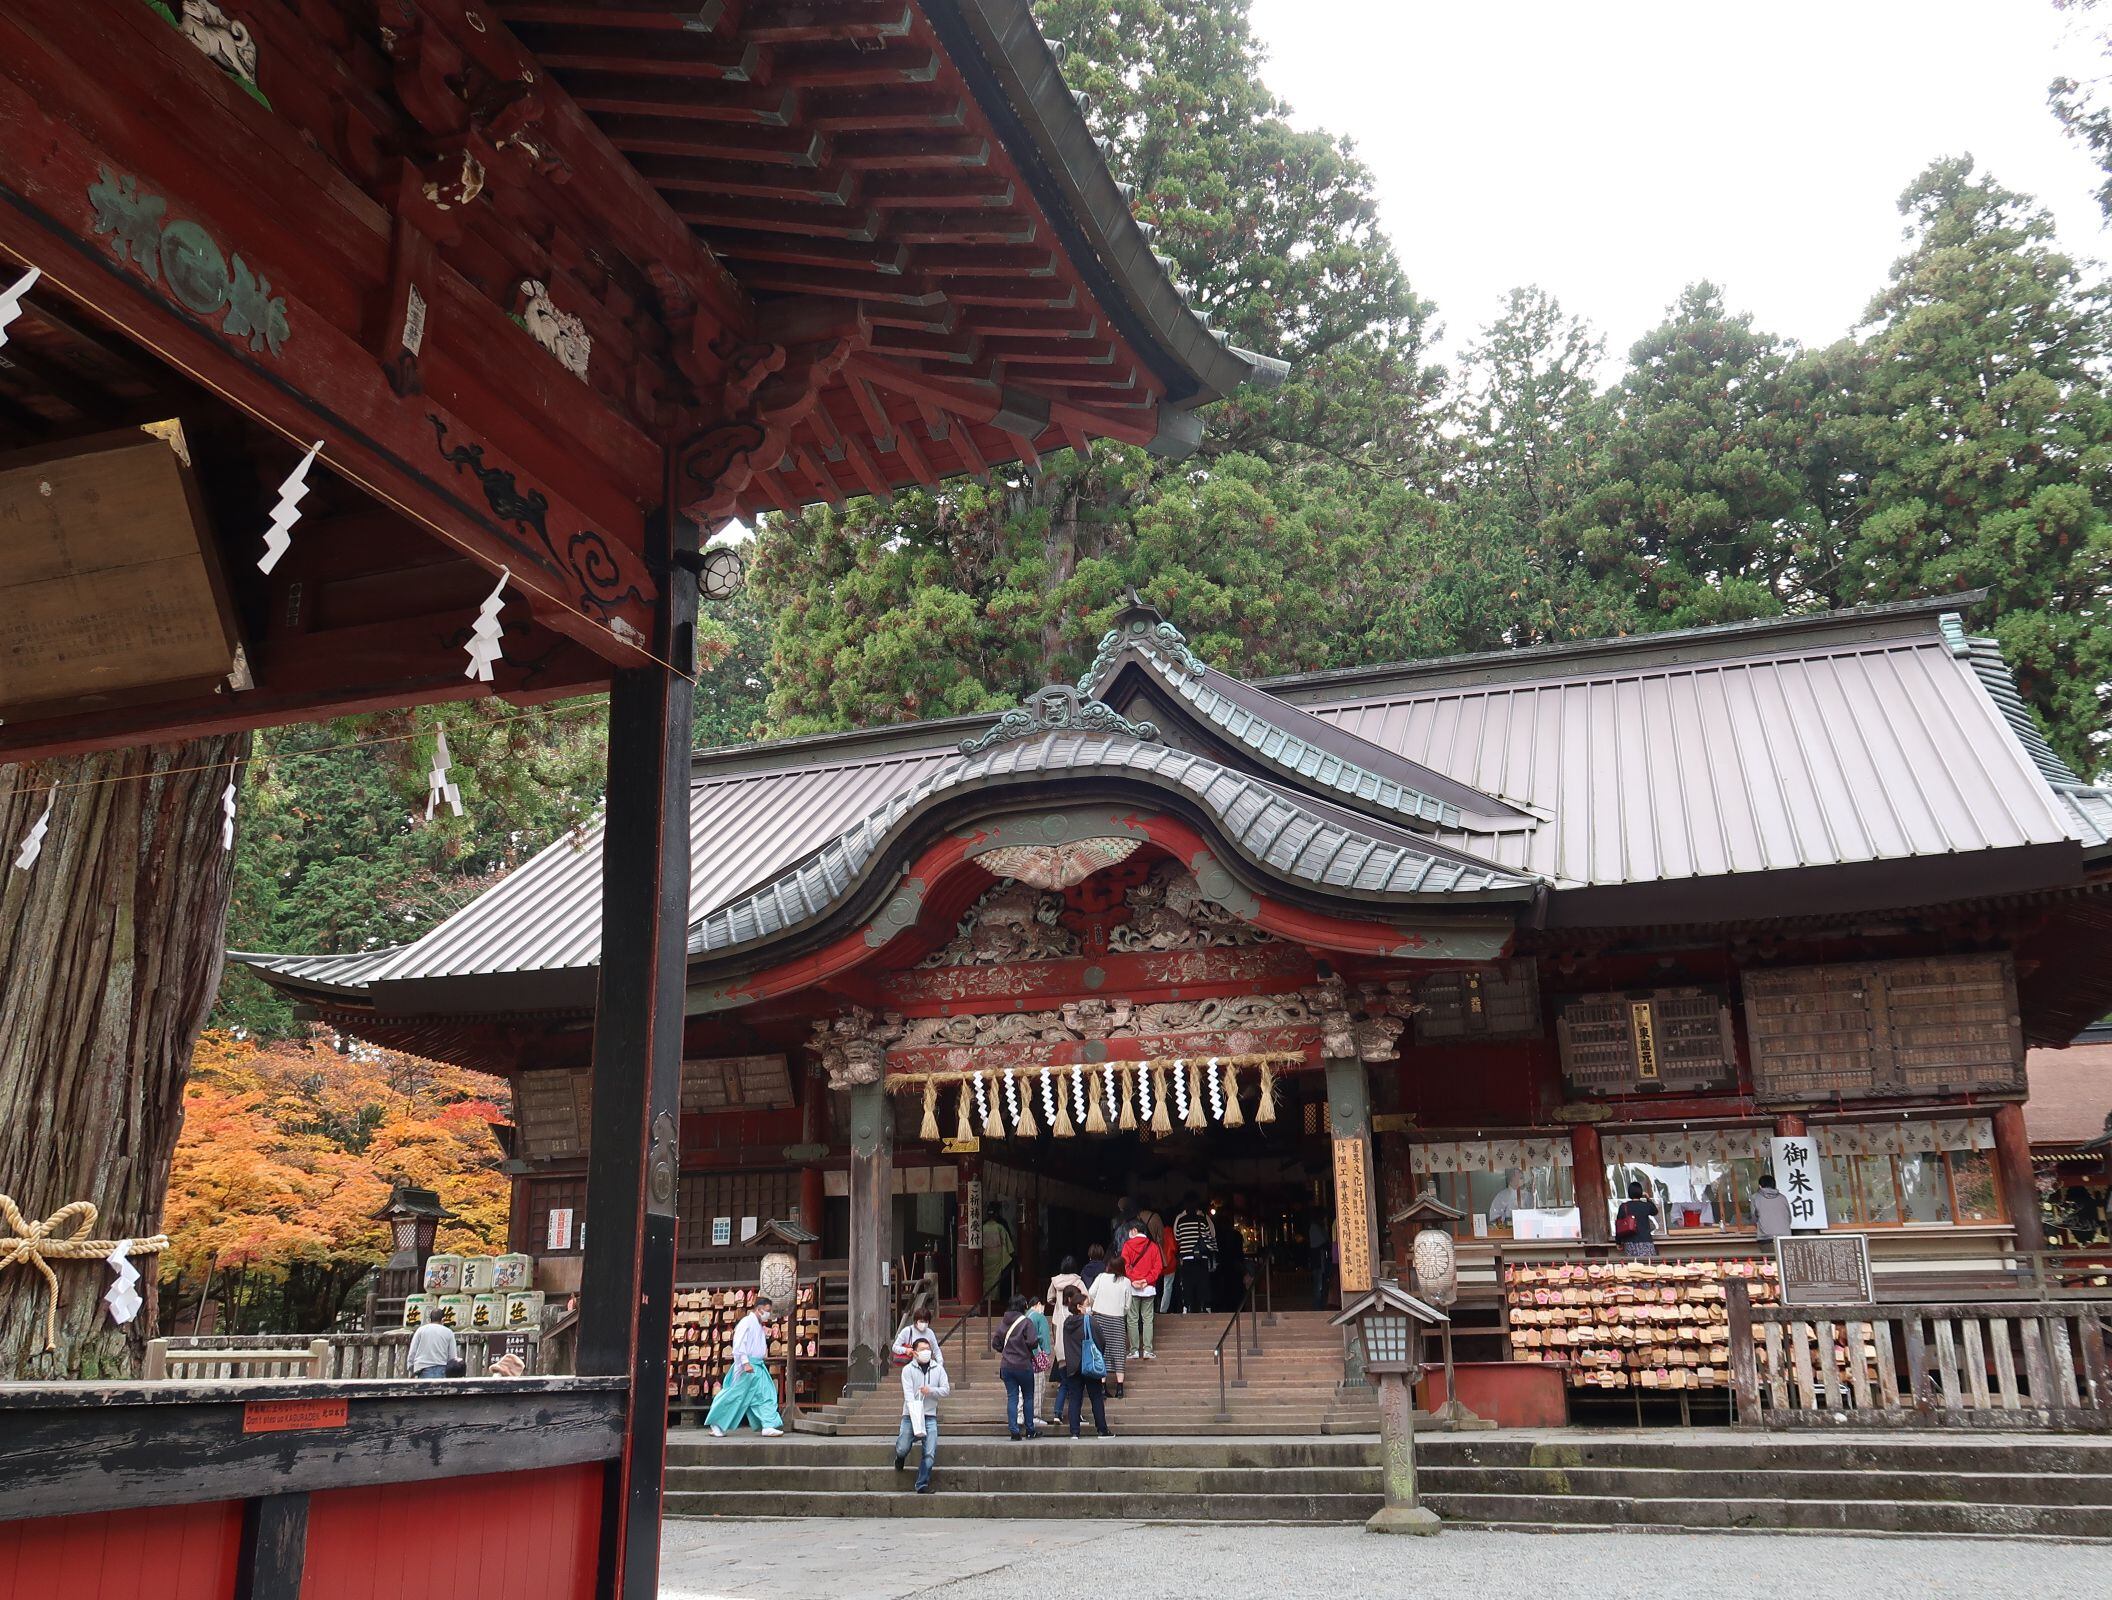 climbing japan's mount fuji can be a spiritual experience despite overtourism